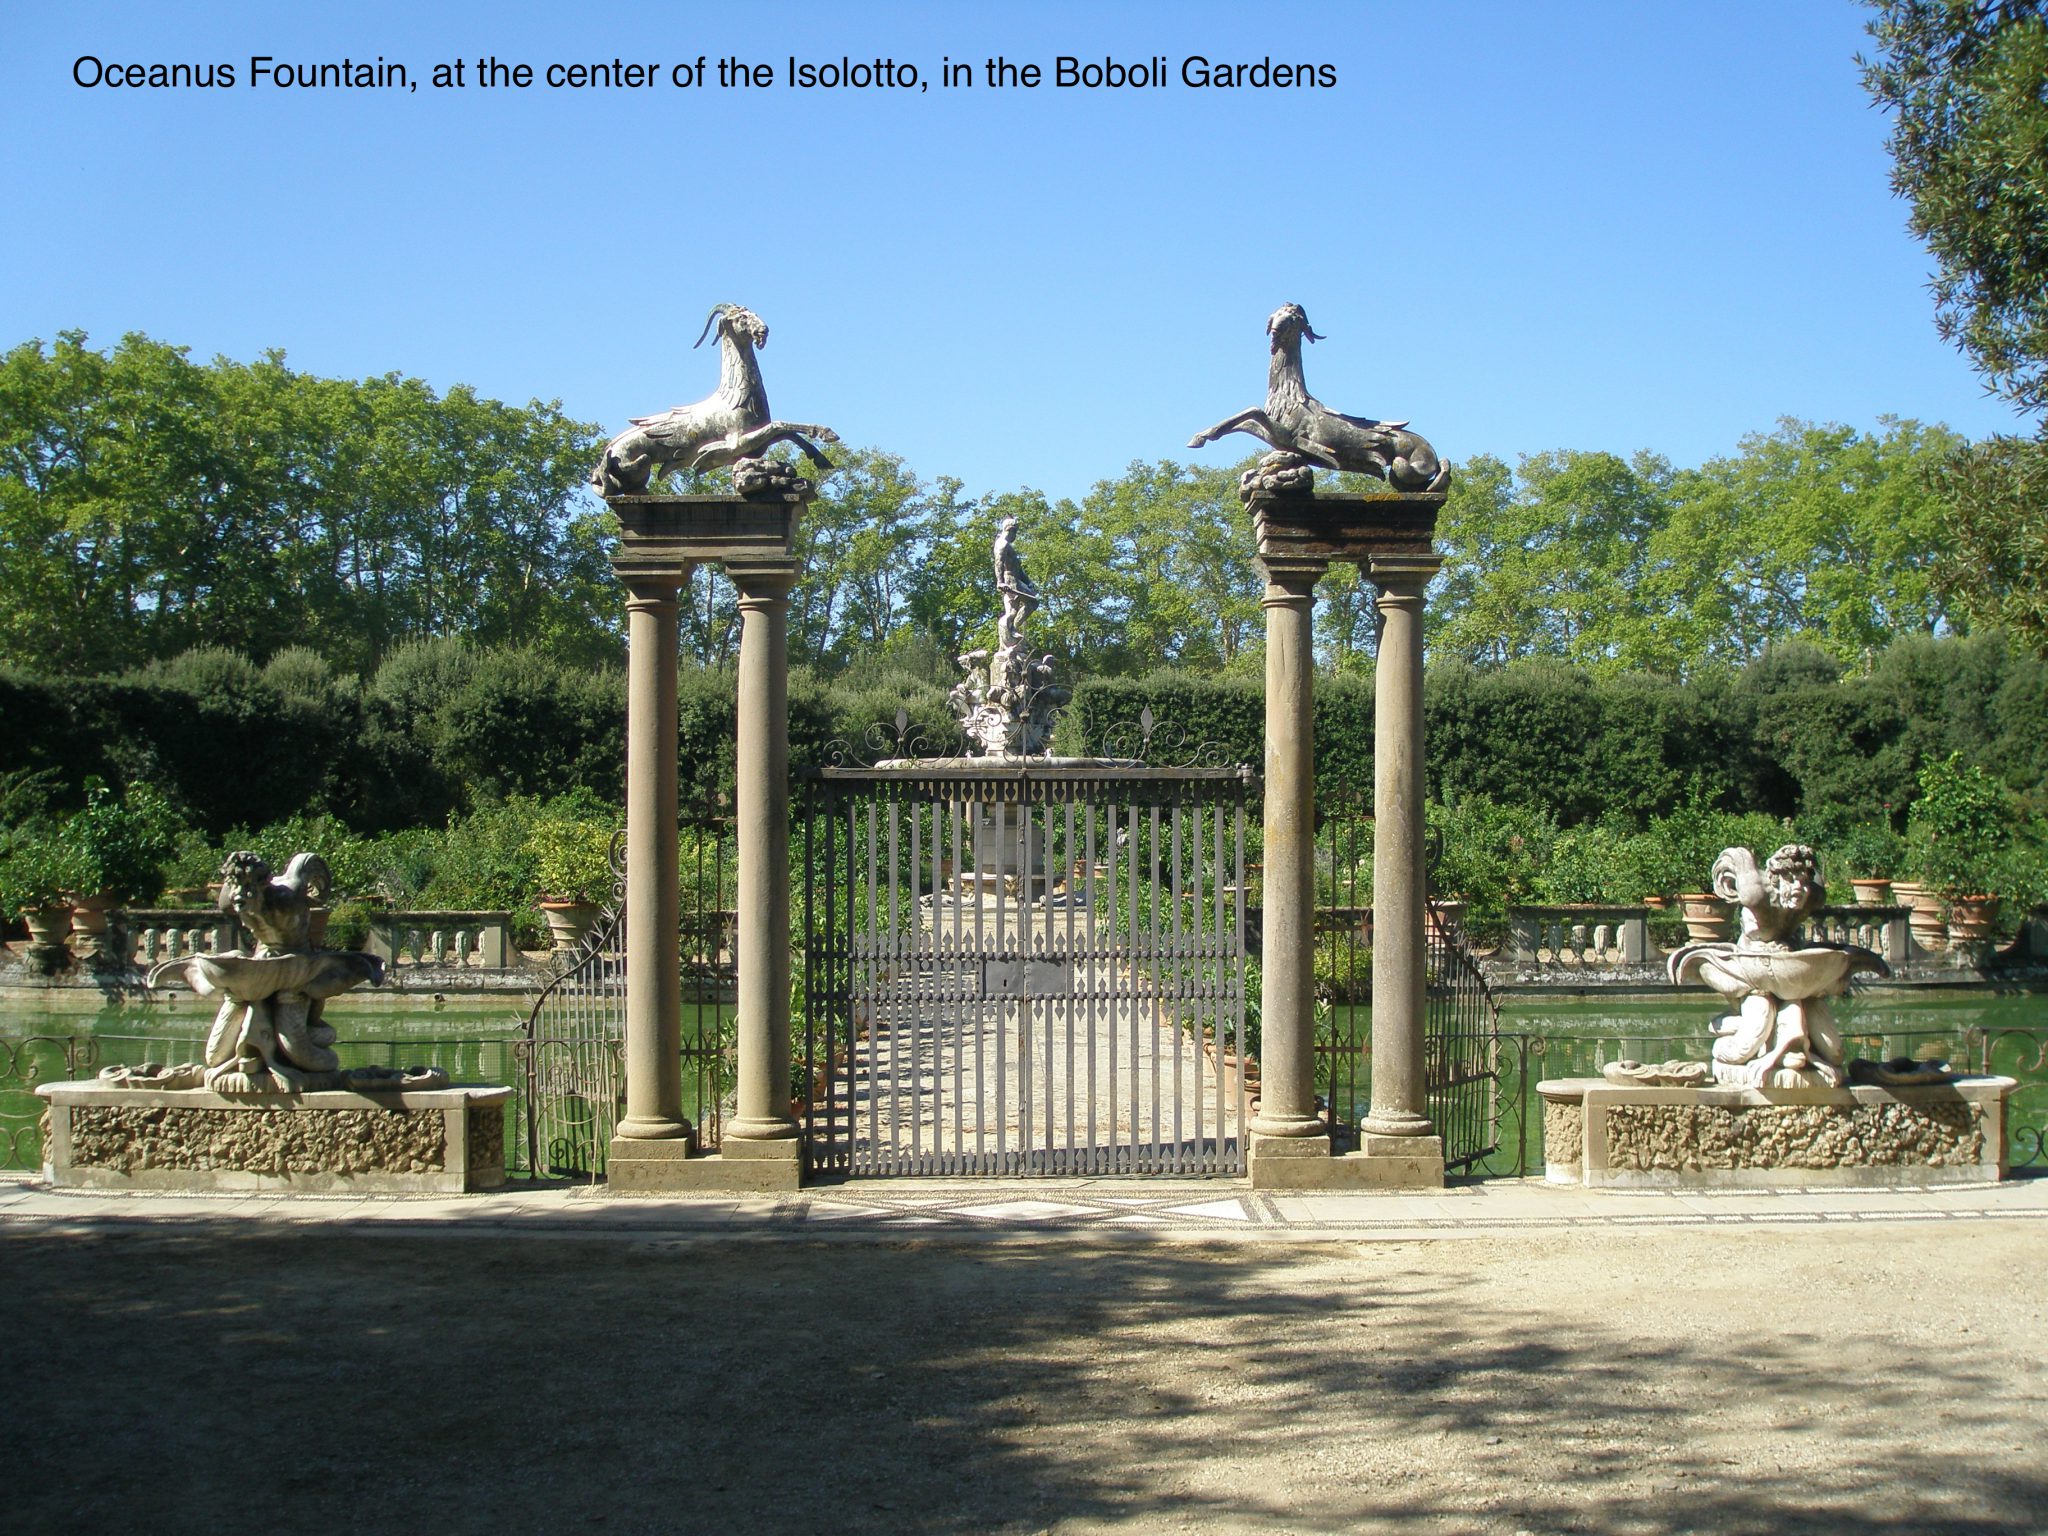 Behind locked gates in the Boboli Gardens, the massive Oceanus Fountain looms.